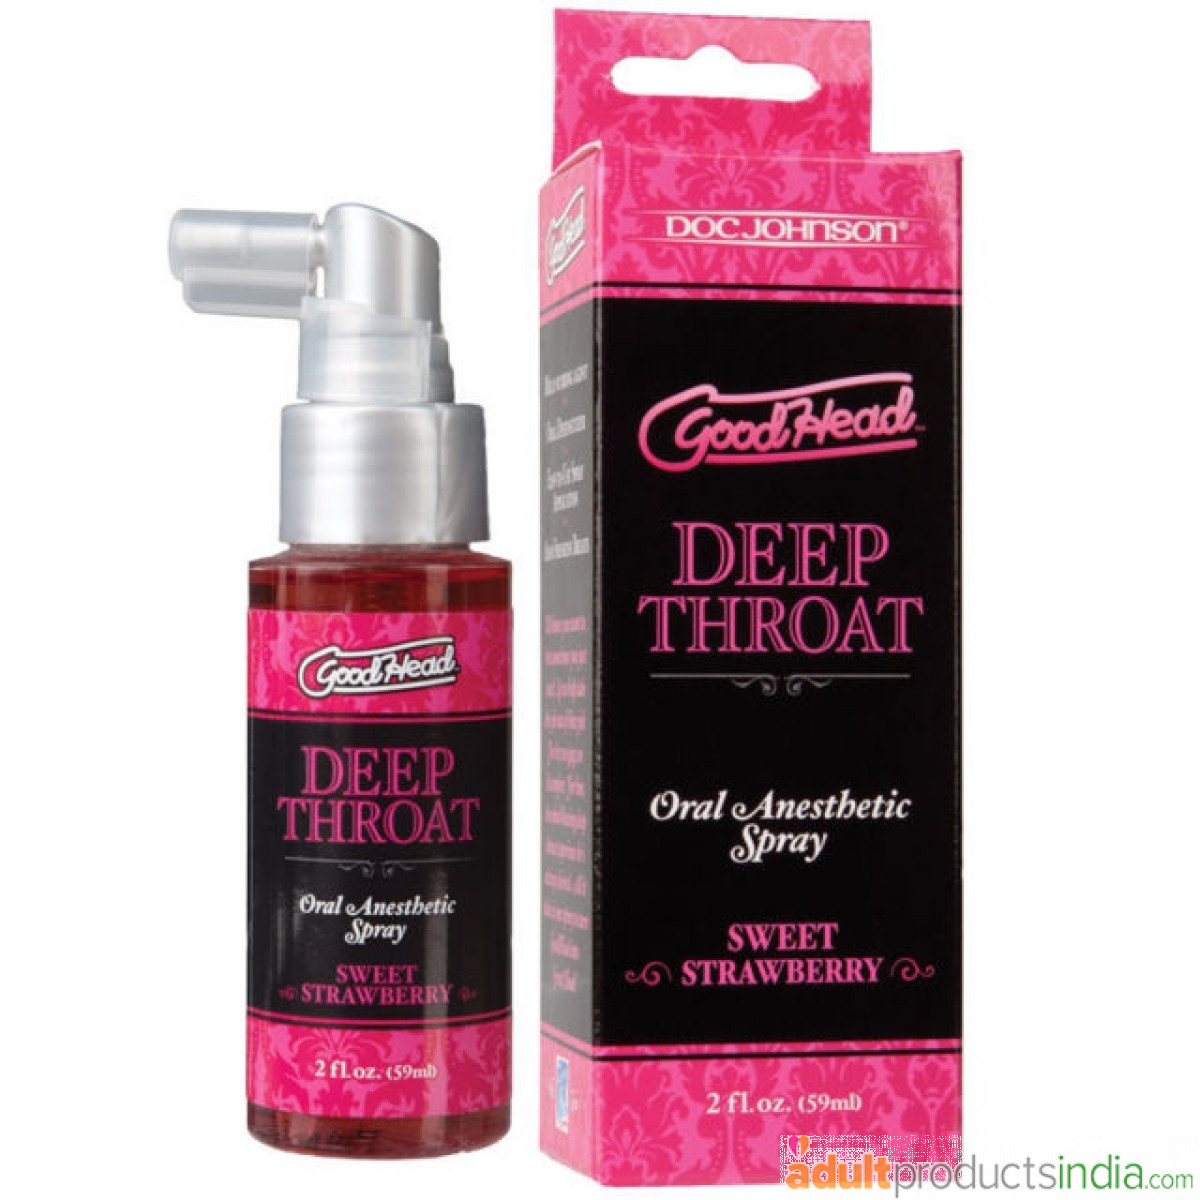 Doc Johnson - GoodHead Deep Throat Spray